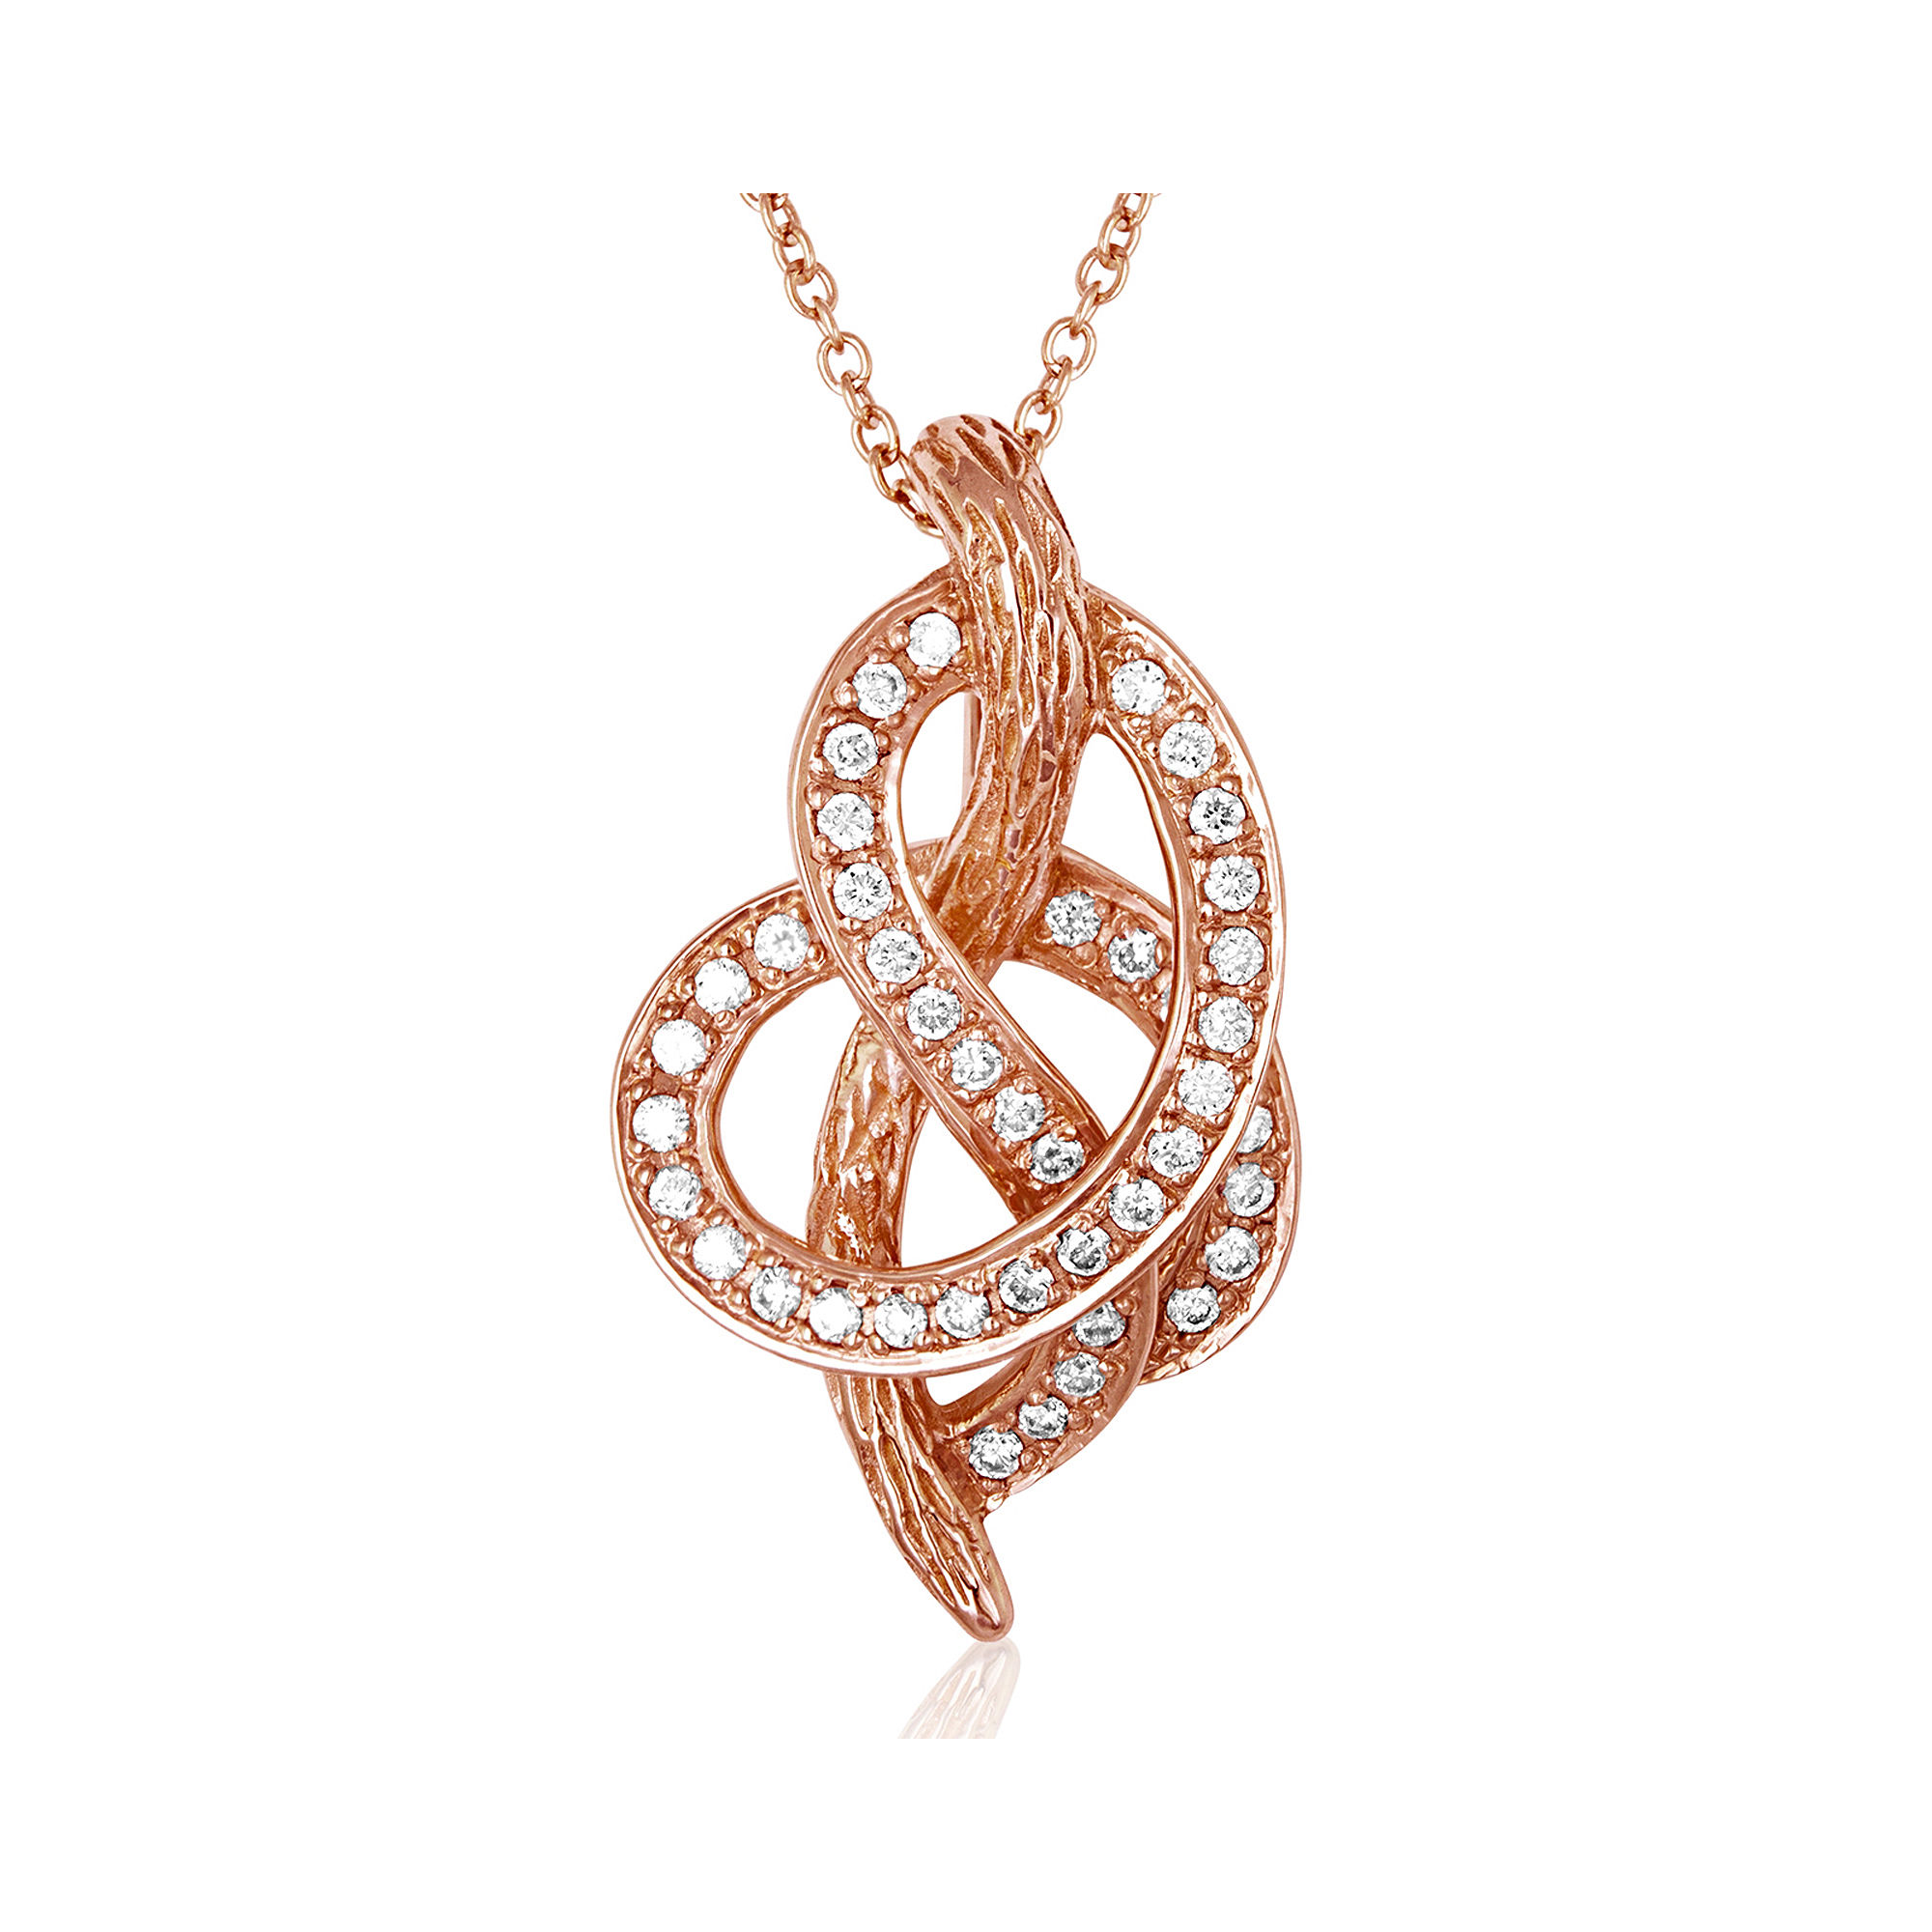 FINE JEWELRY Le Vian Grand Sample Sale 1/4 CT. T.W. Diamond 14K Rose Gold Knot Pendant Necklace